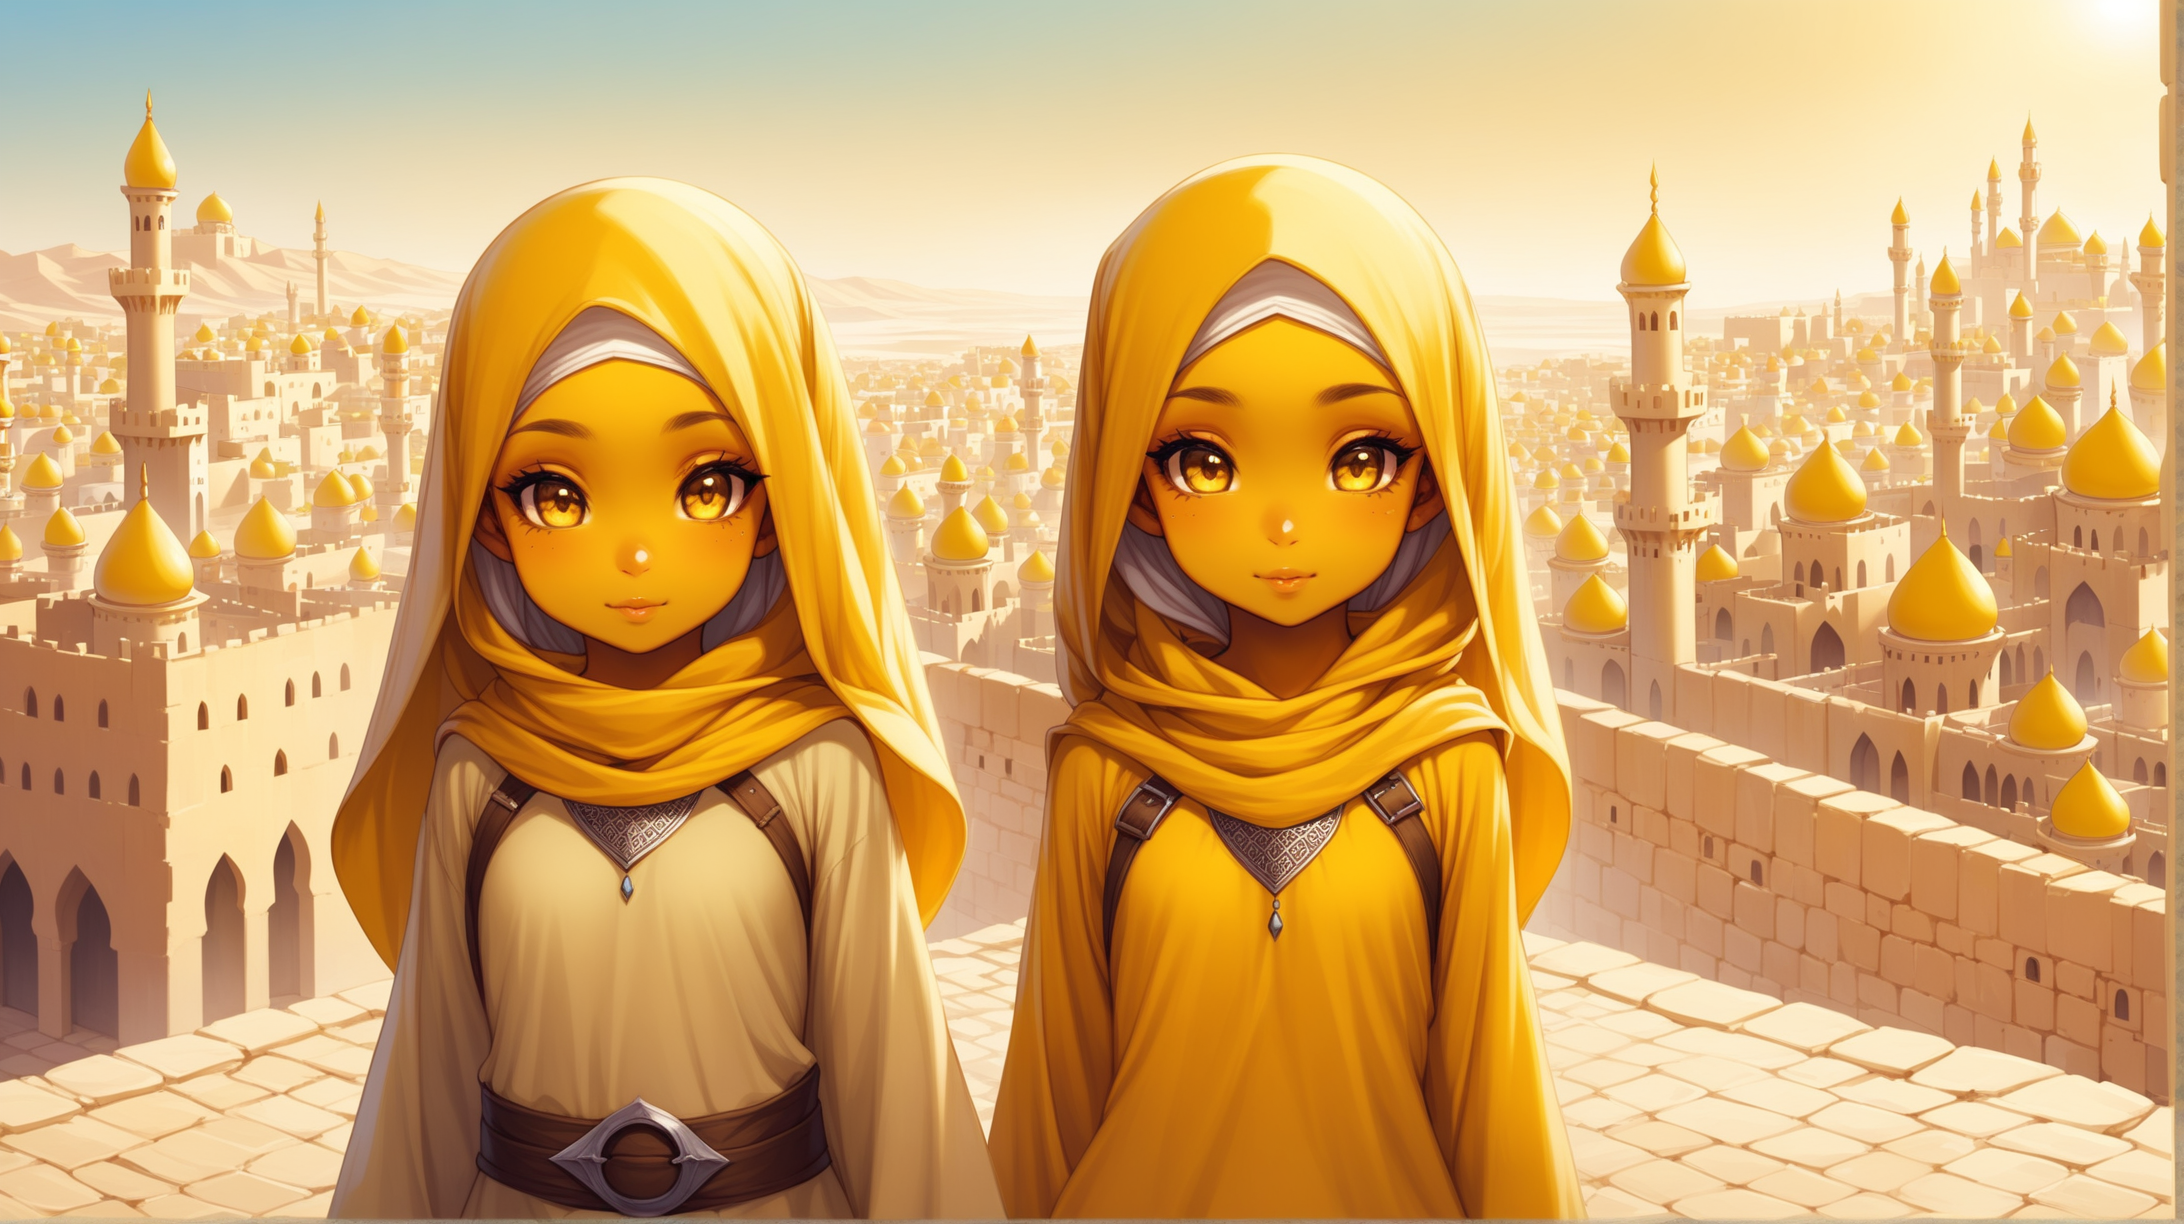 Medieval Fantasy Gnome Girls Exploring an Arabic City